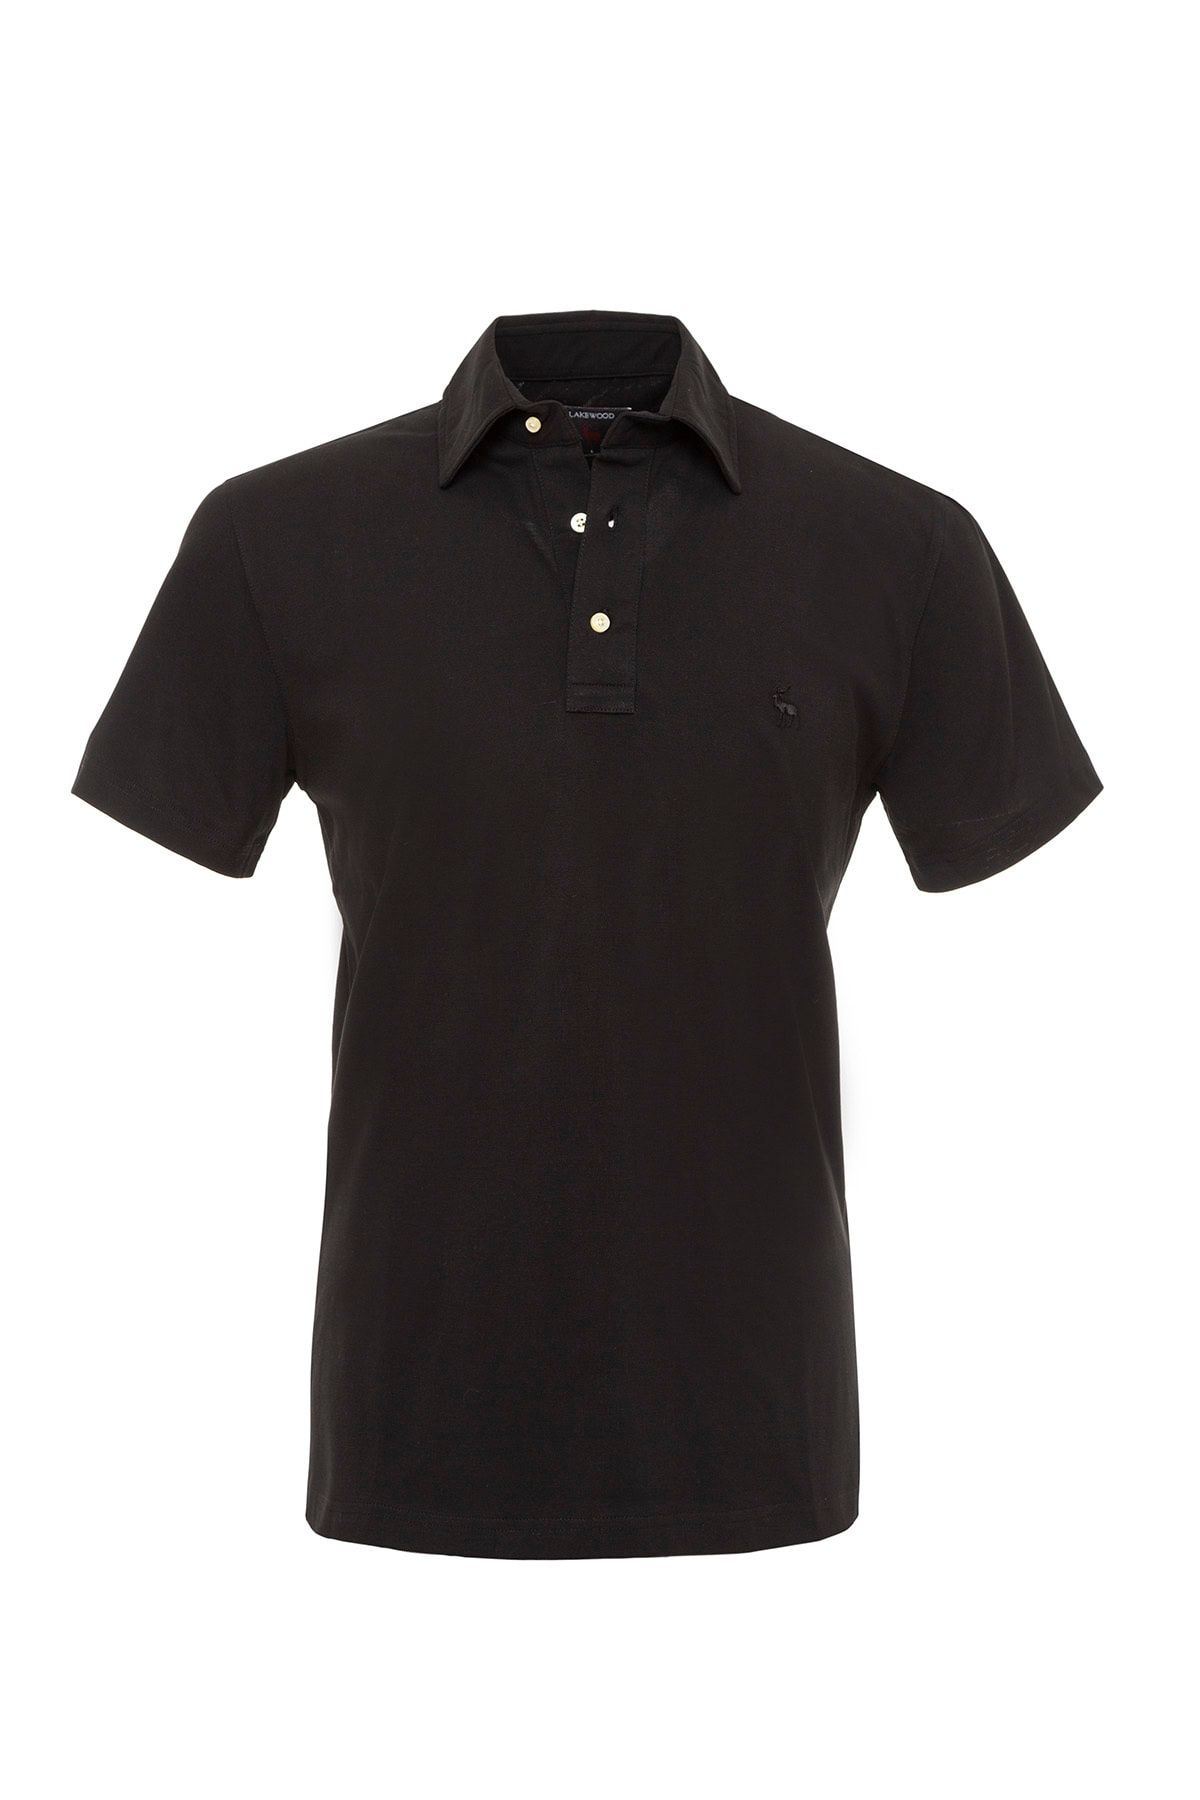 LAKEWOOD Erkek Siyah Düz Renkli Gömlek Yakalı Polo T-Shirt